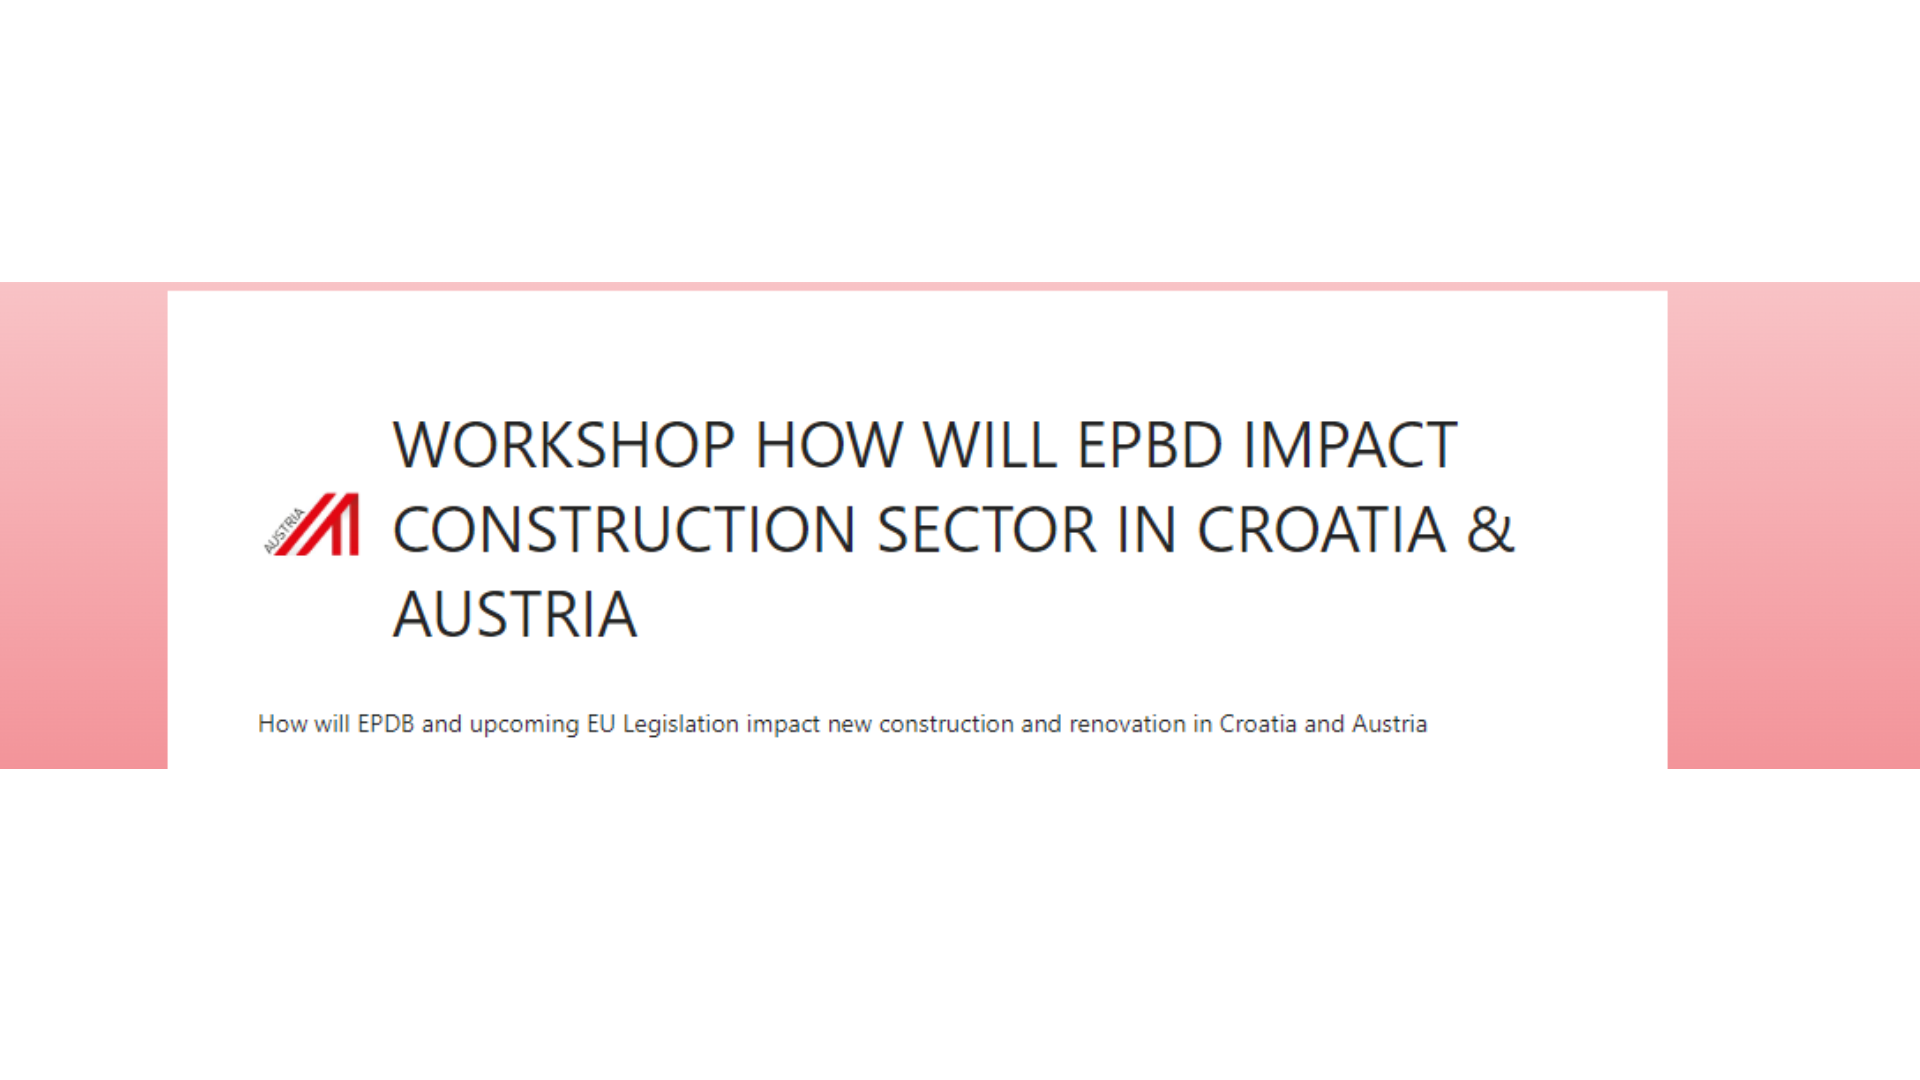 WORKSHOP: HOW WILL EPBD IMPACT CONSTRUCTION SECTOR IN CROATIA & AUSTRIA